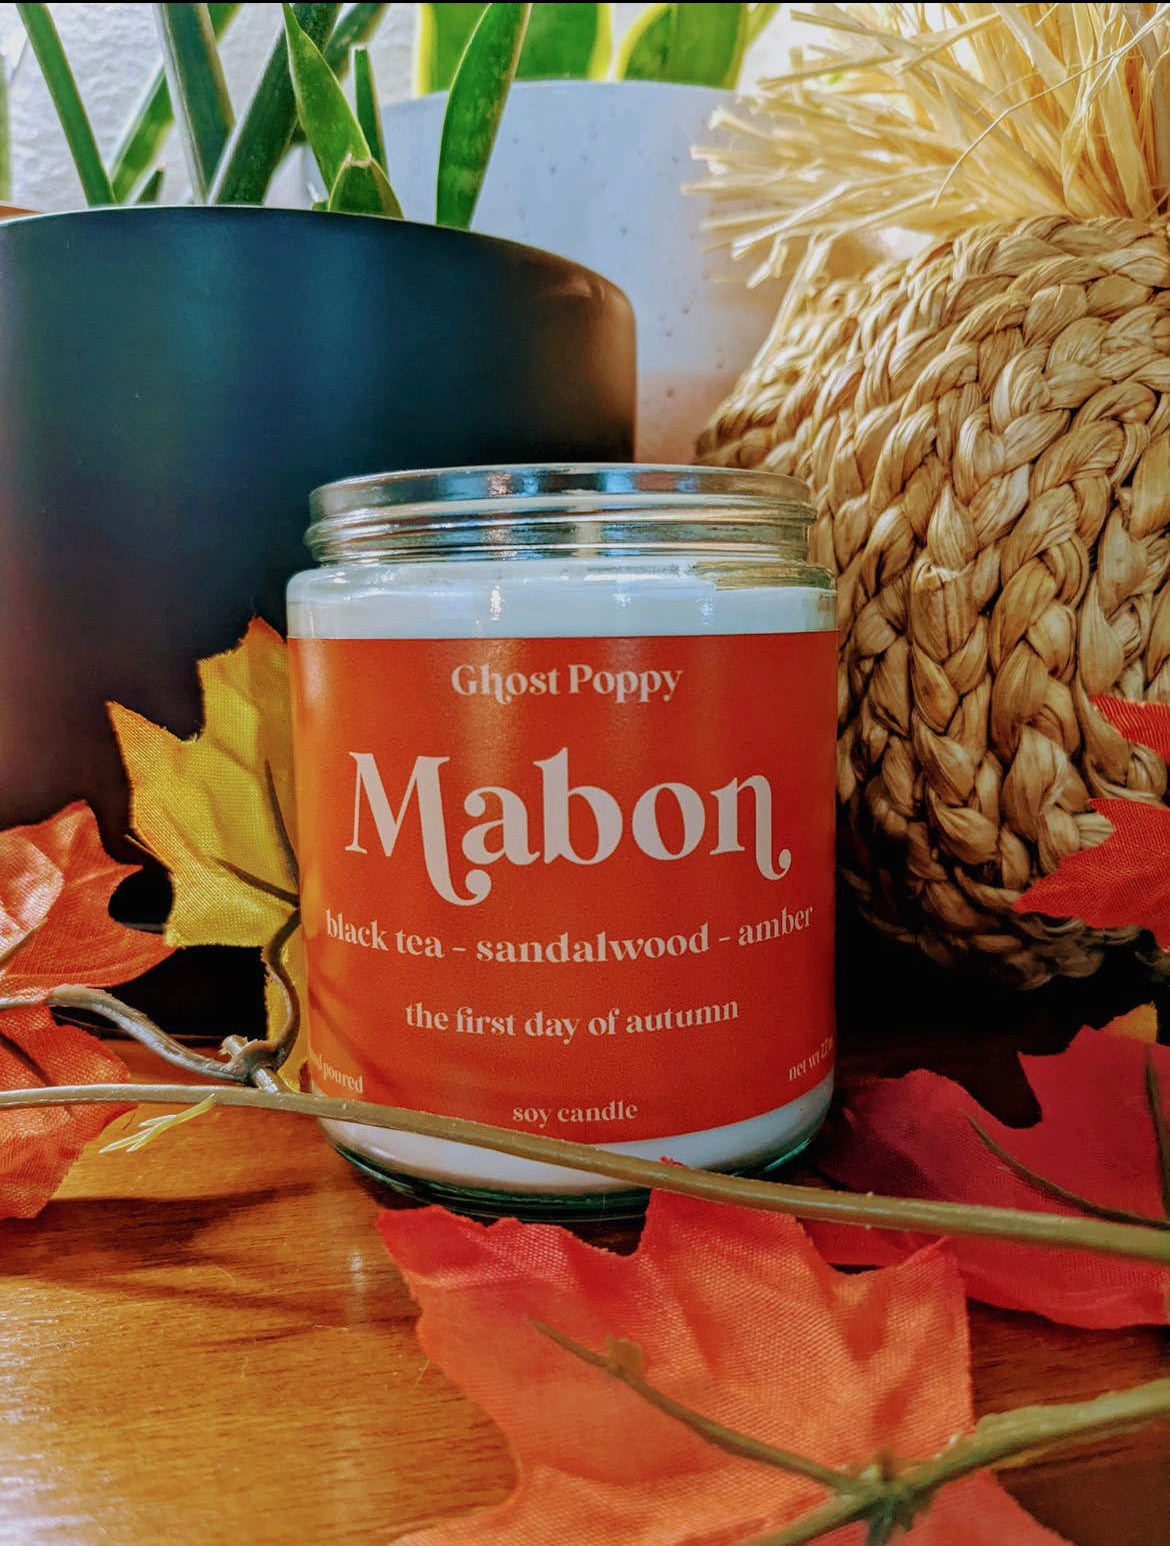 Mabon / Autumn Equinox Candle